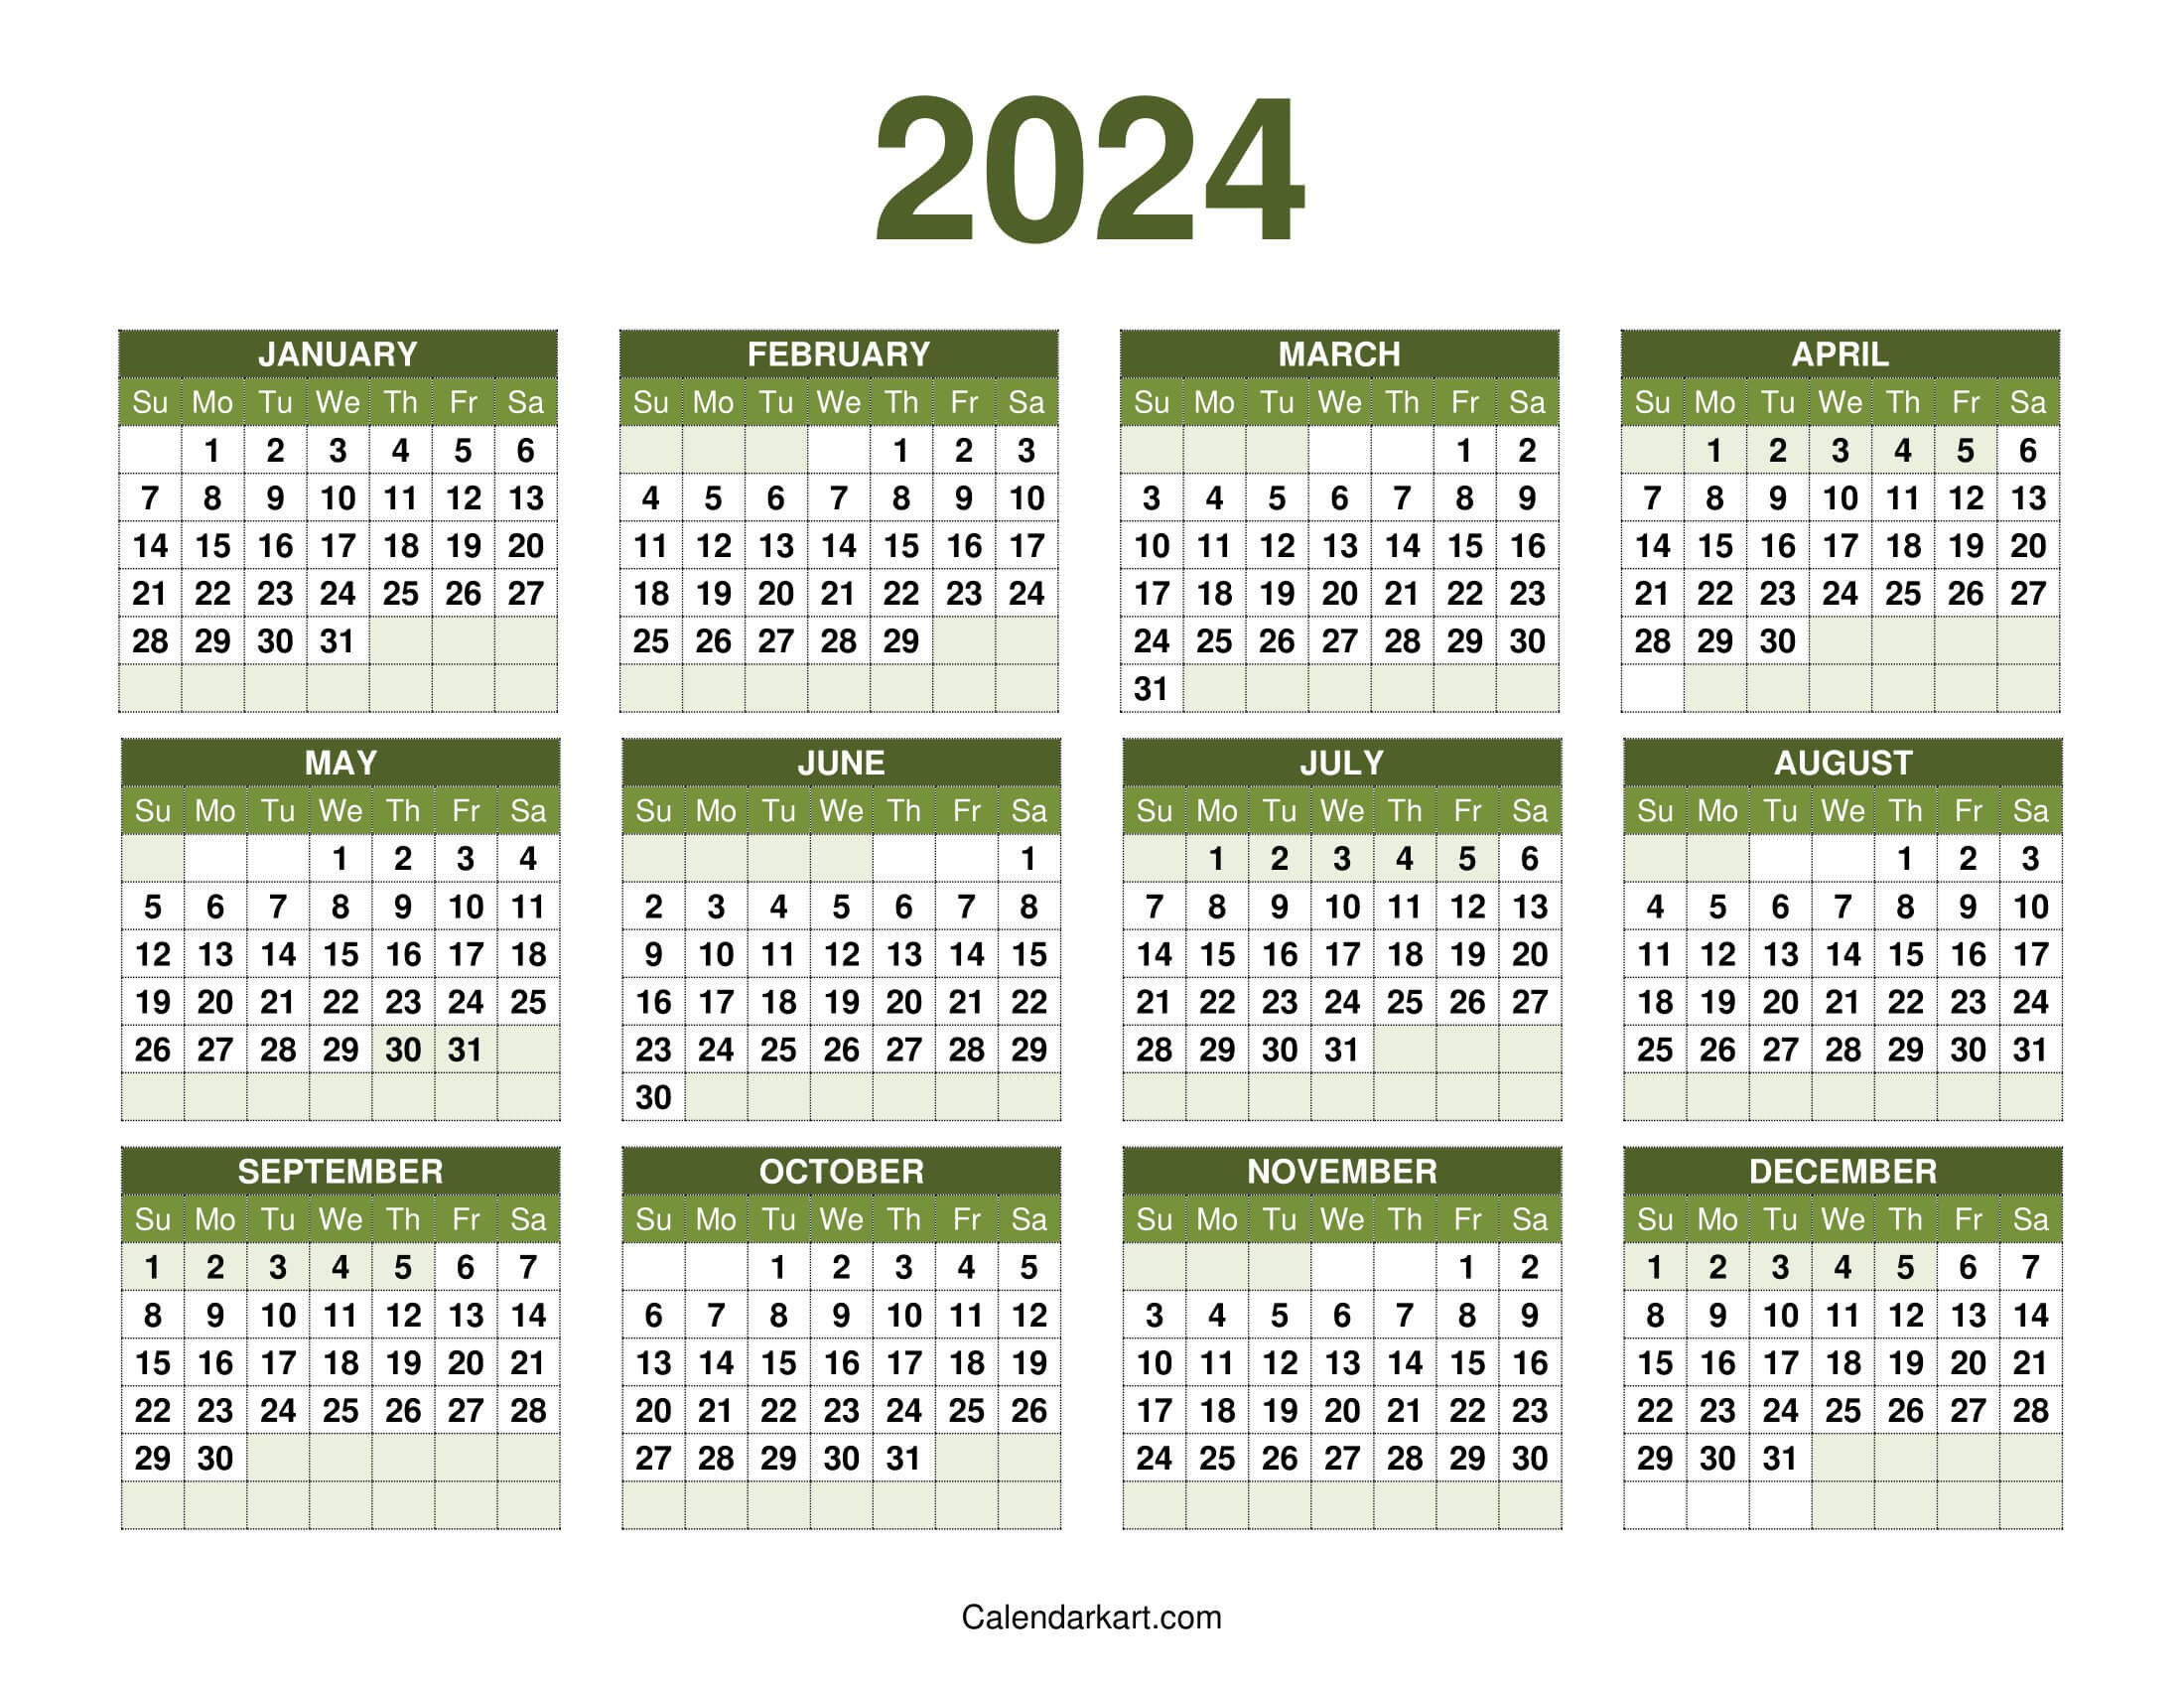 Free Printable Year At A Glance Calendar 2023-2024 - Calendarkart |  Calendar 2024